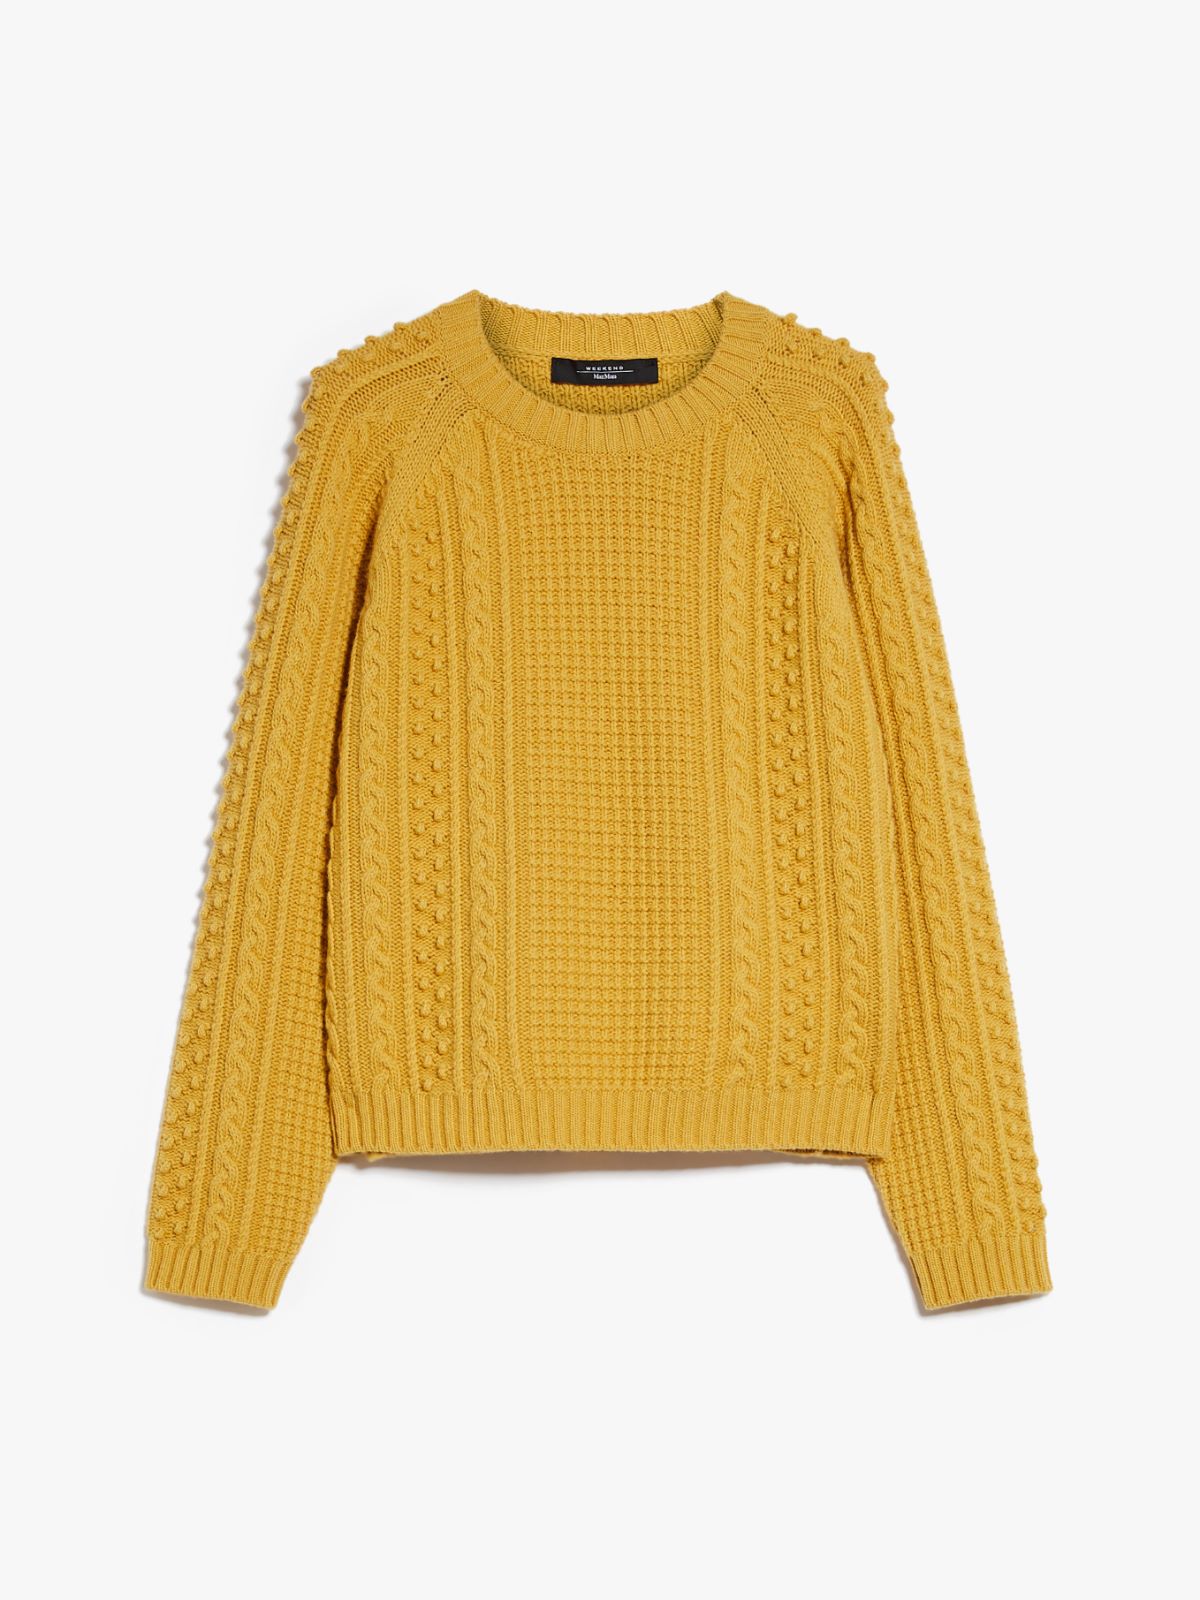 Wool yarn sweater - YELLOW - Weekend Max Mara - 6